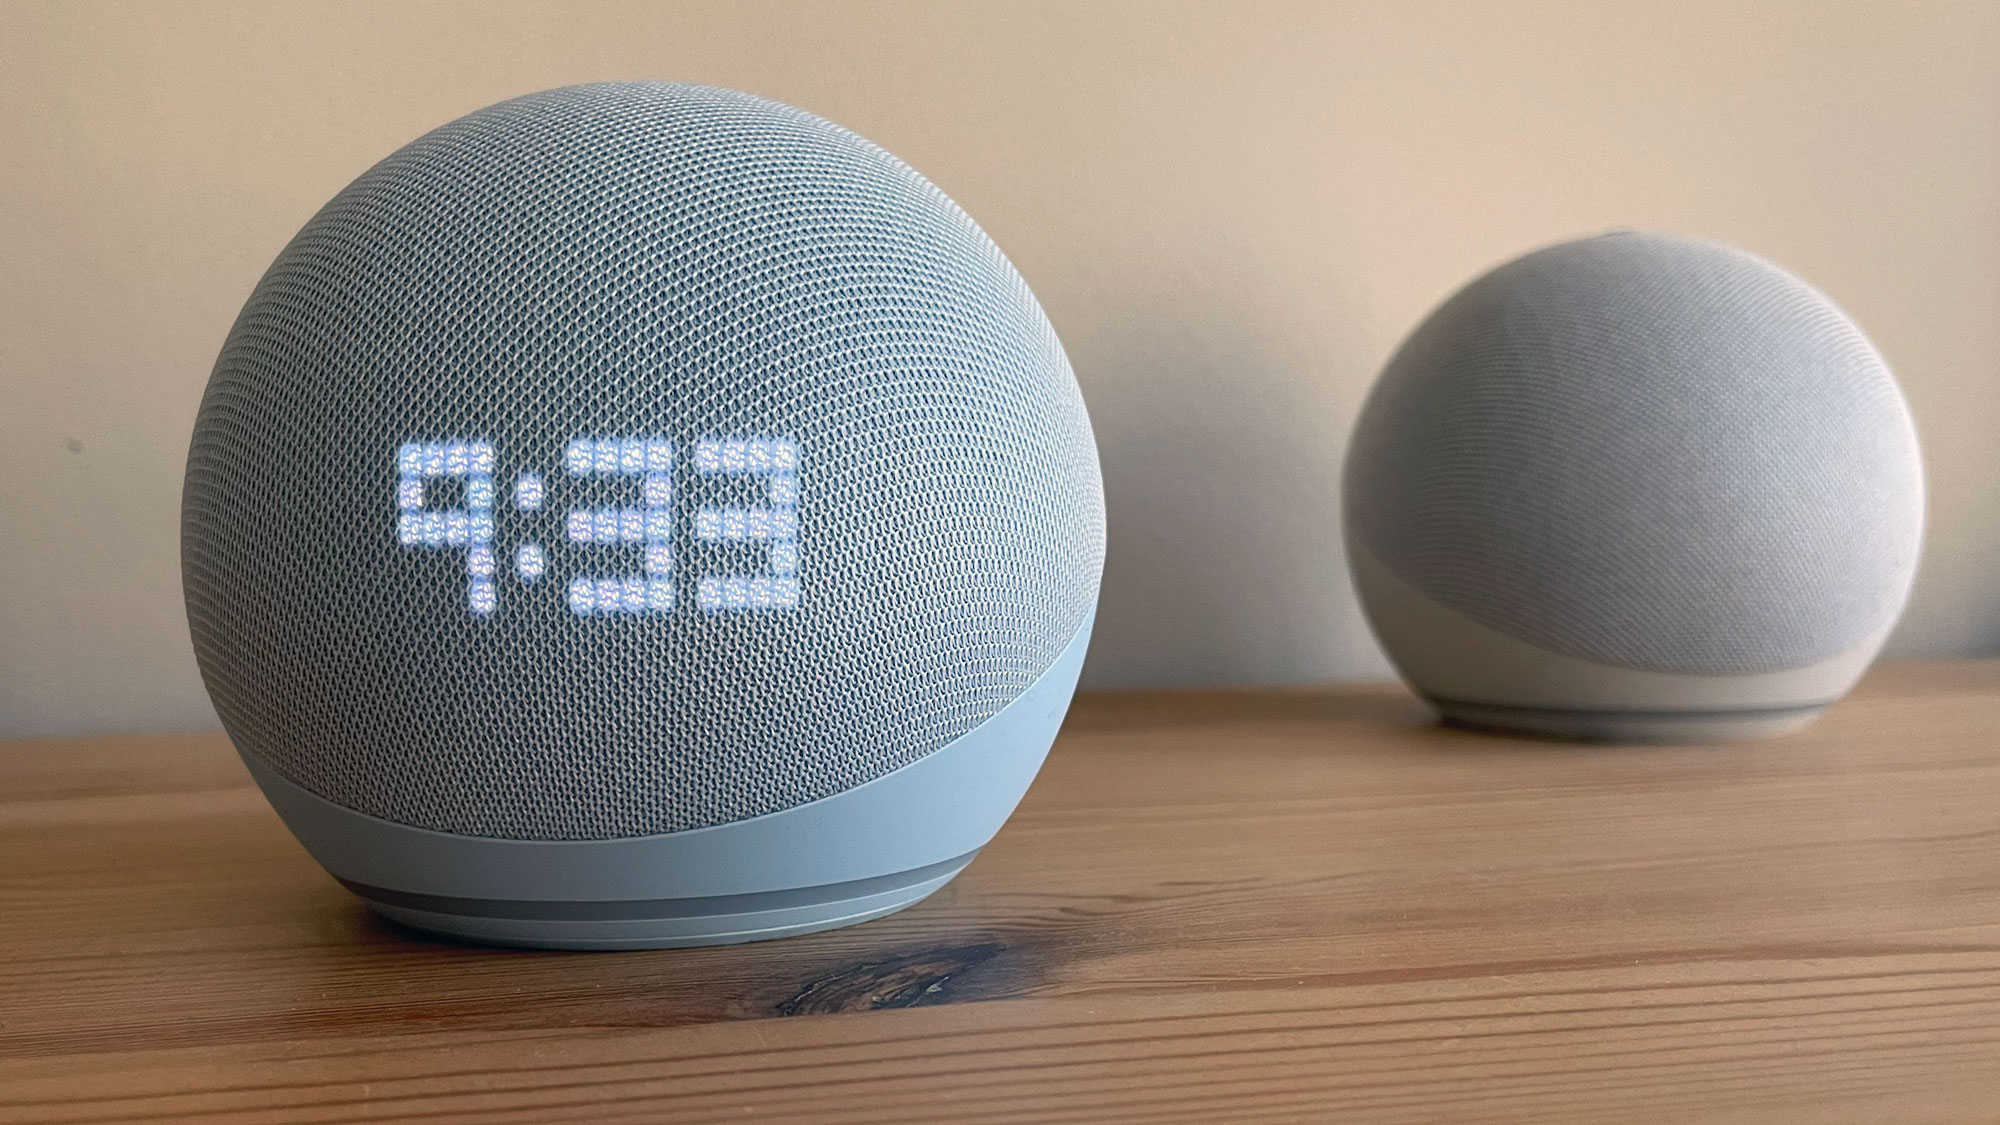  Amazon Echo Dot with clock (5th-gen) - Best Value